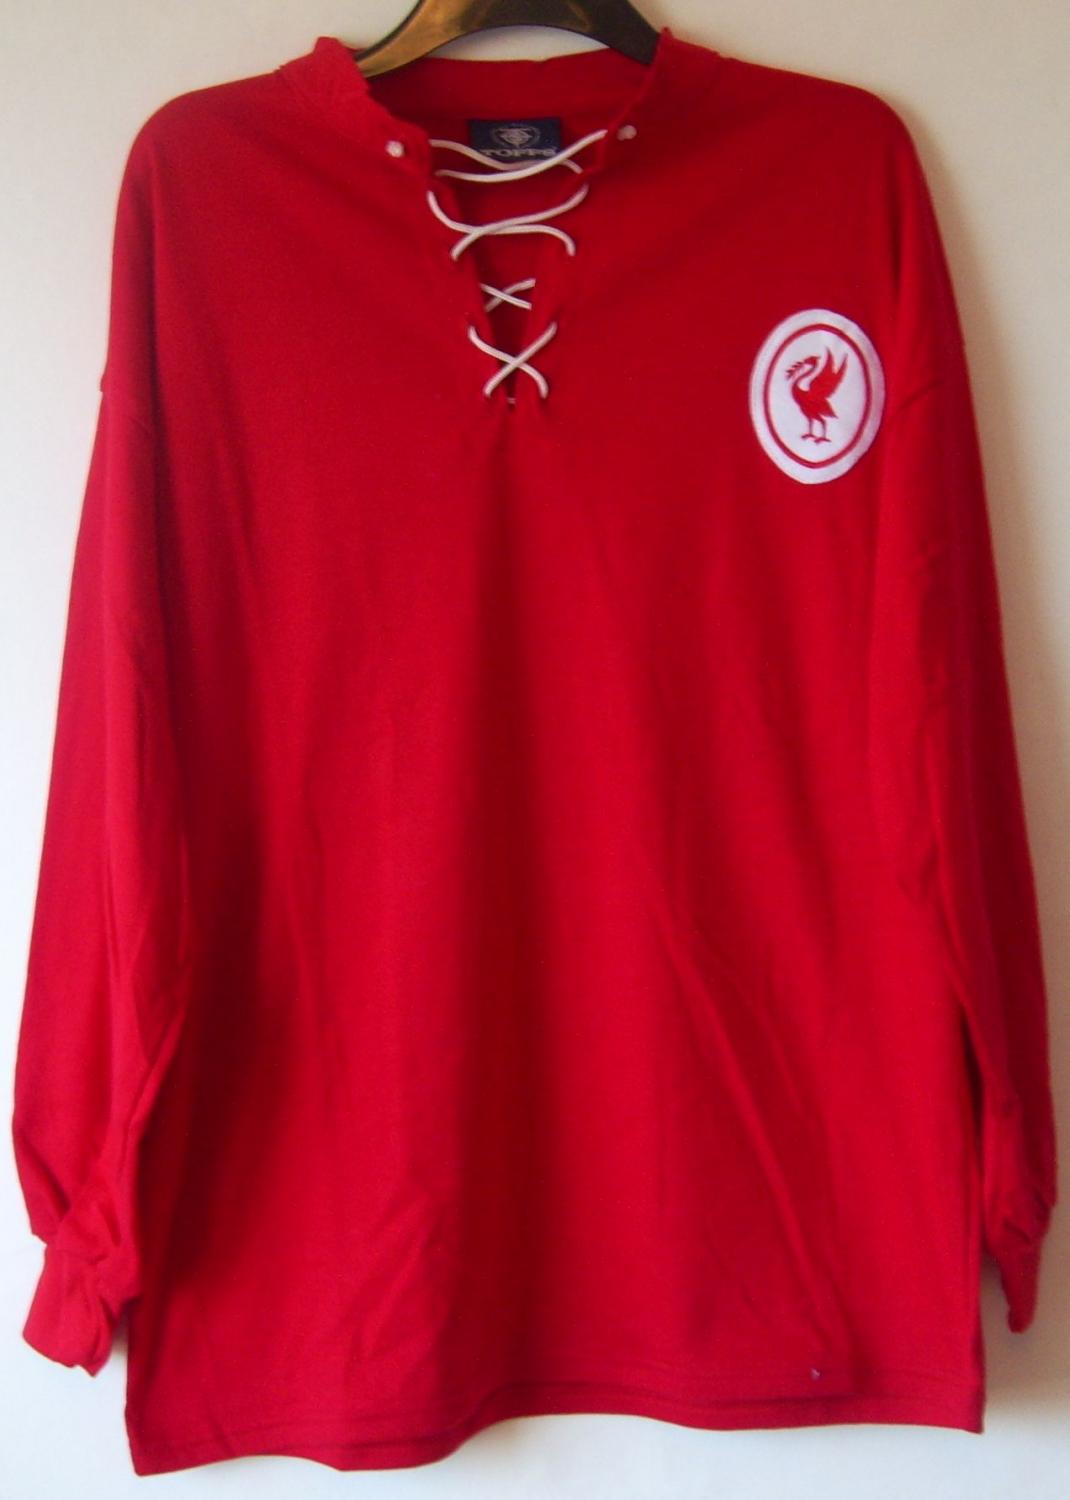 Liverpool Retro Replicas football shirt 1920 - 1930. Added on 2013-05